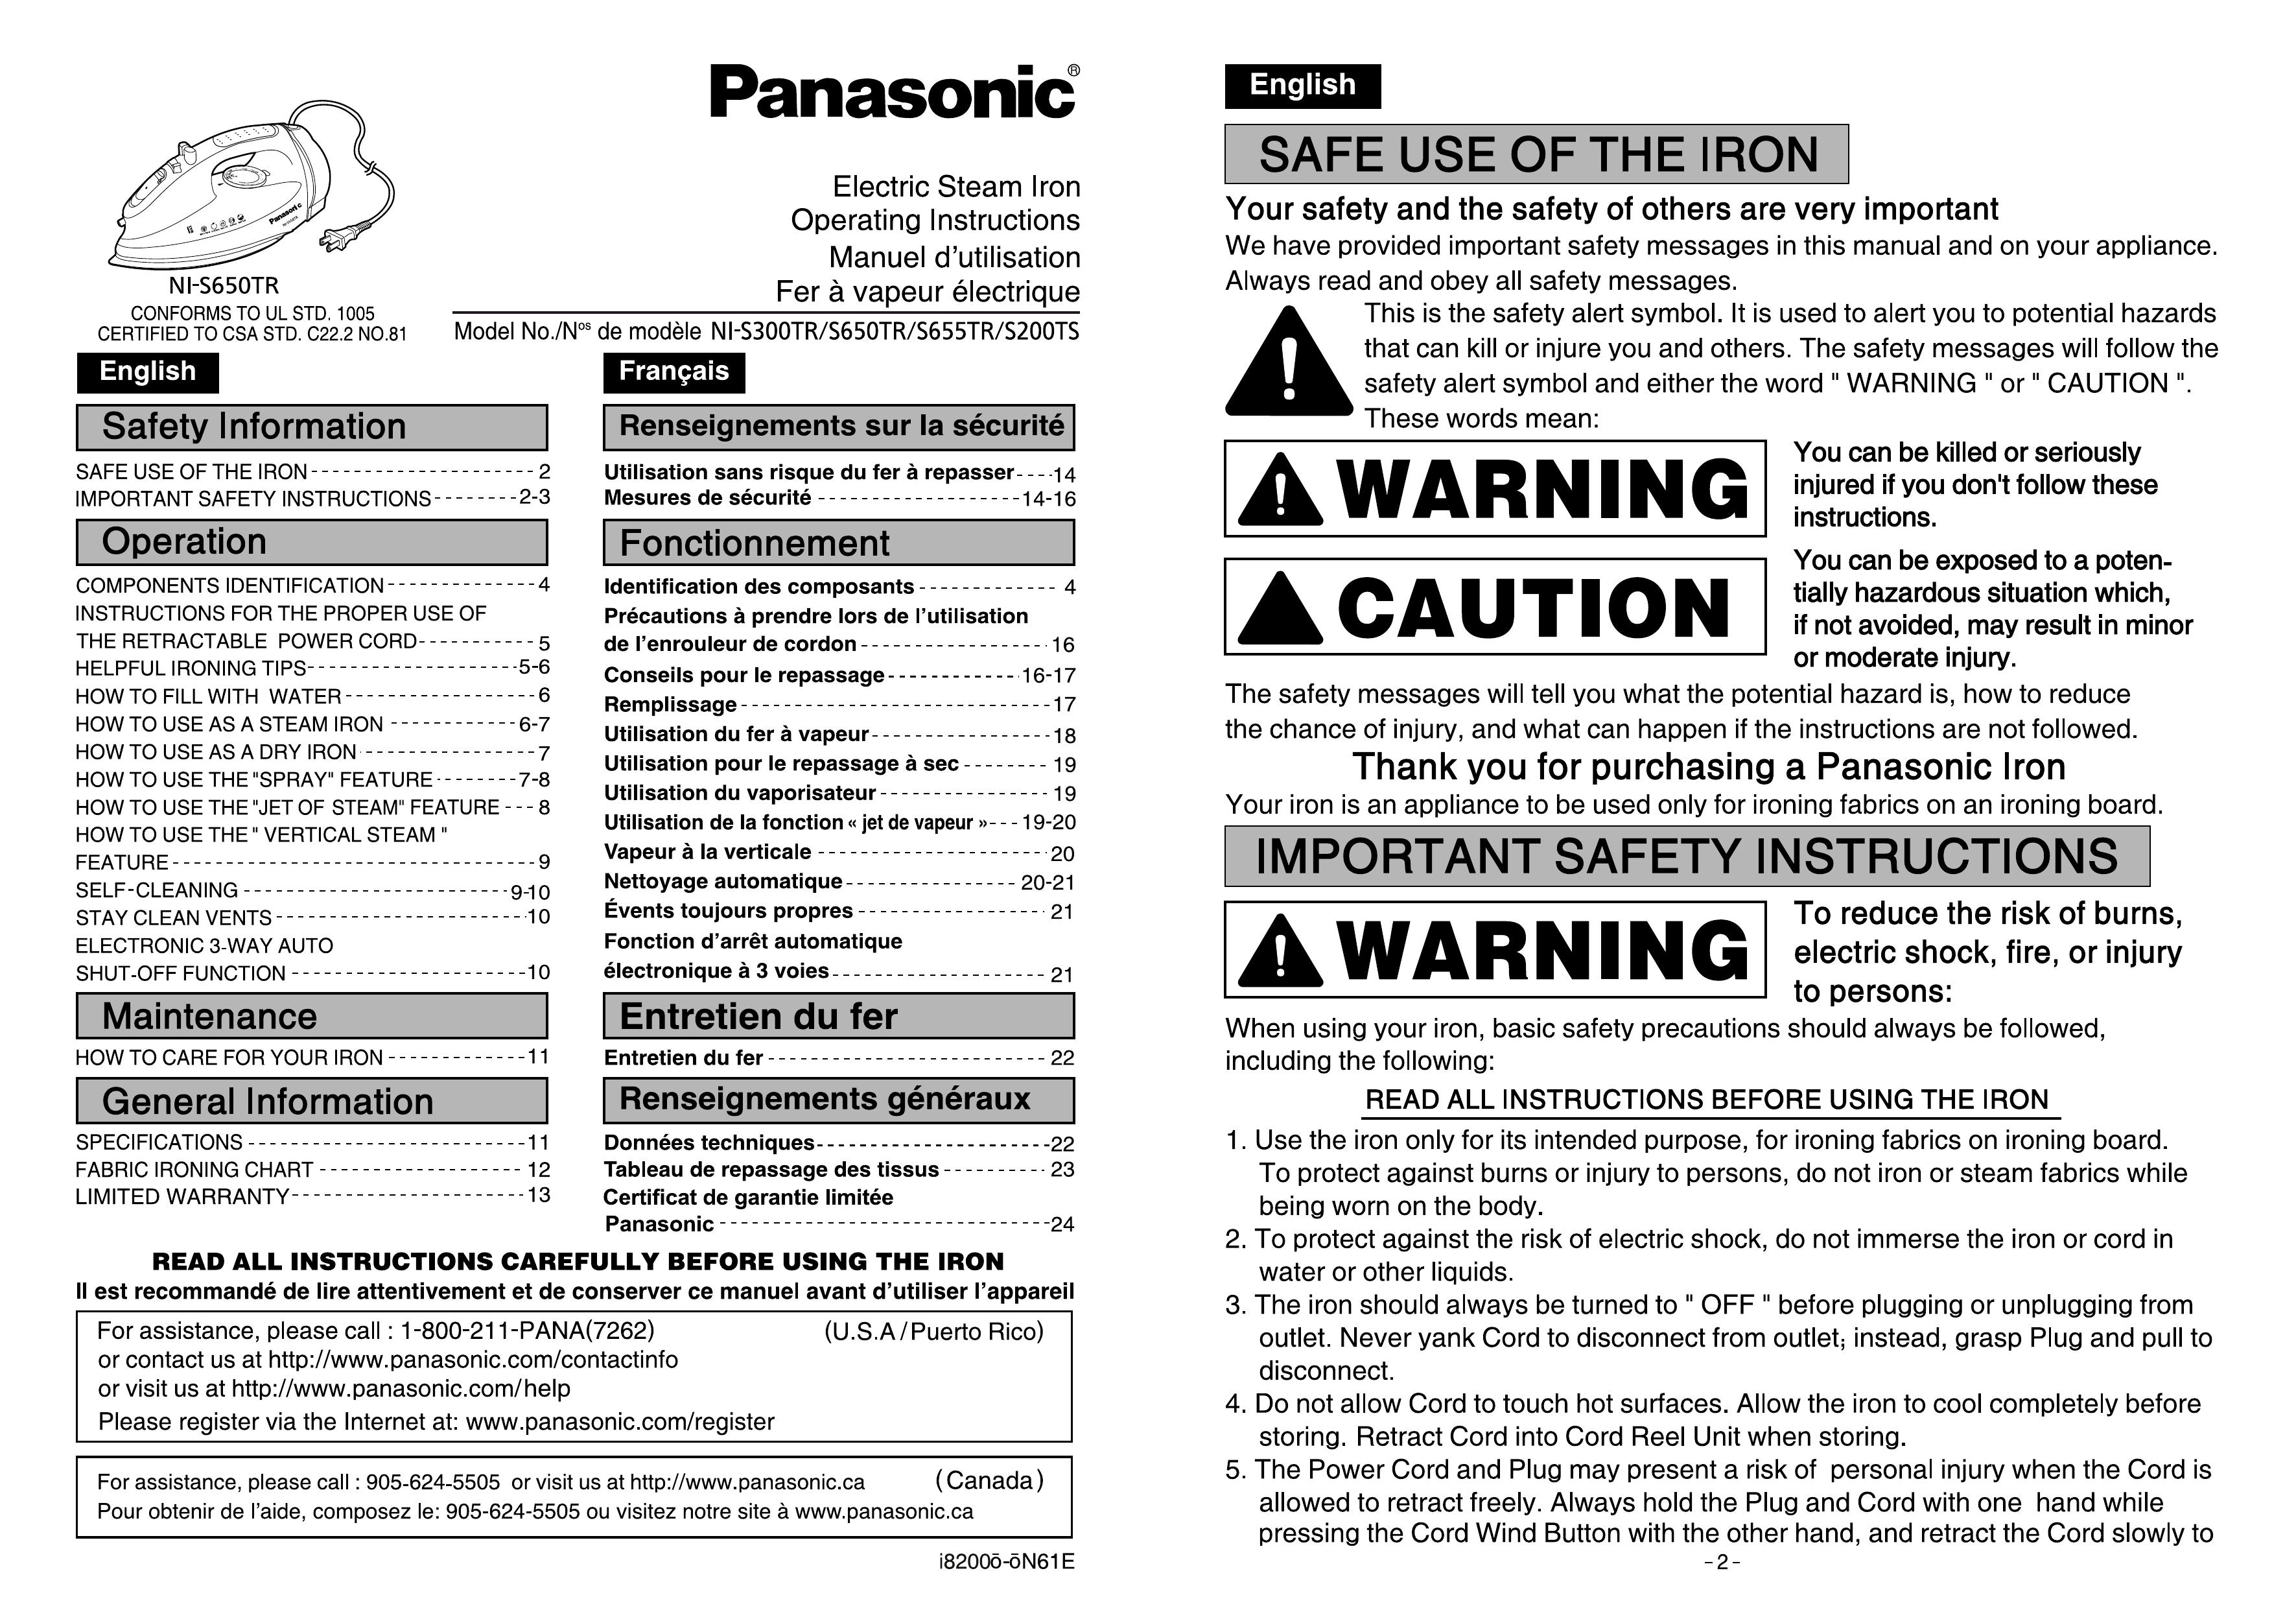 Panasonic NI-S300TR Iron User Manual